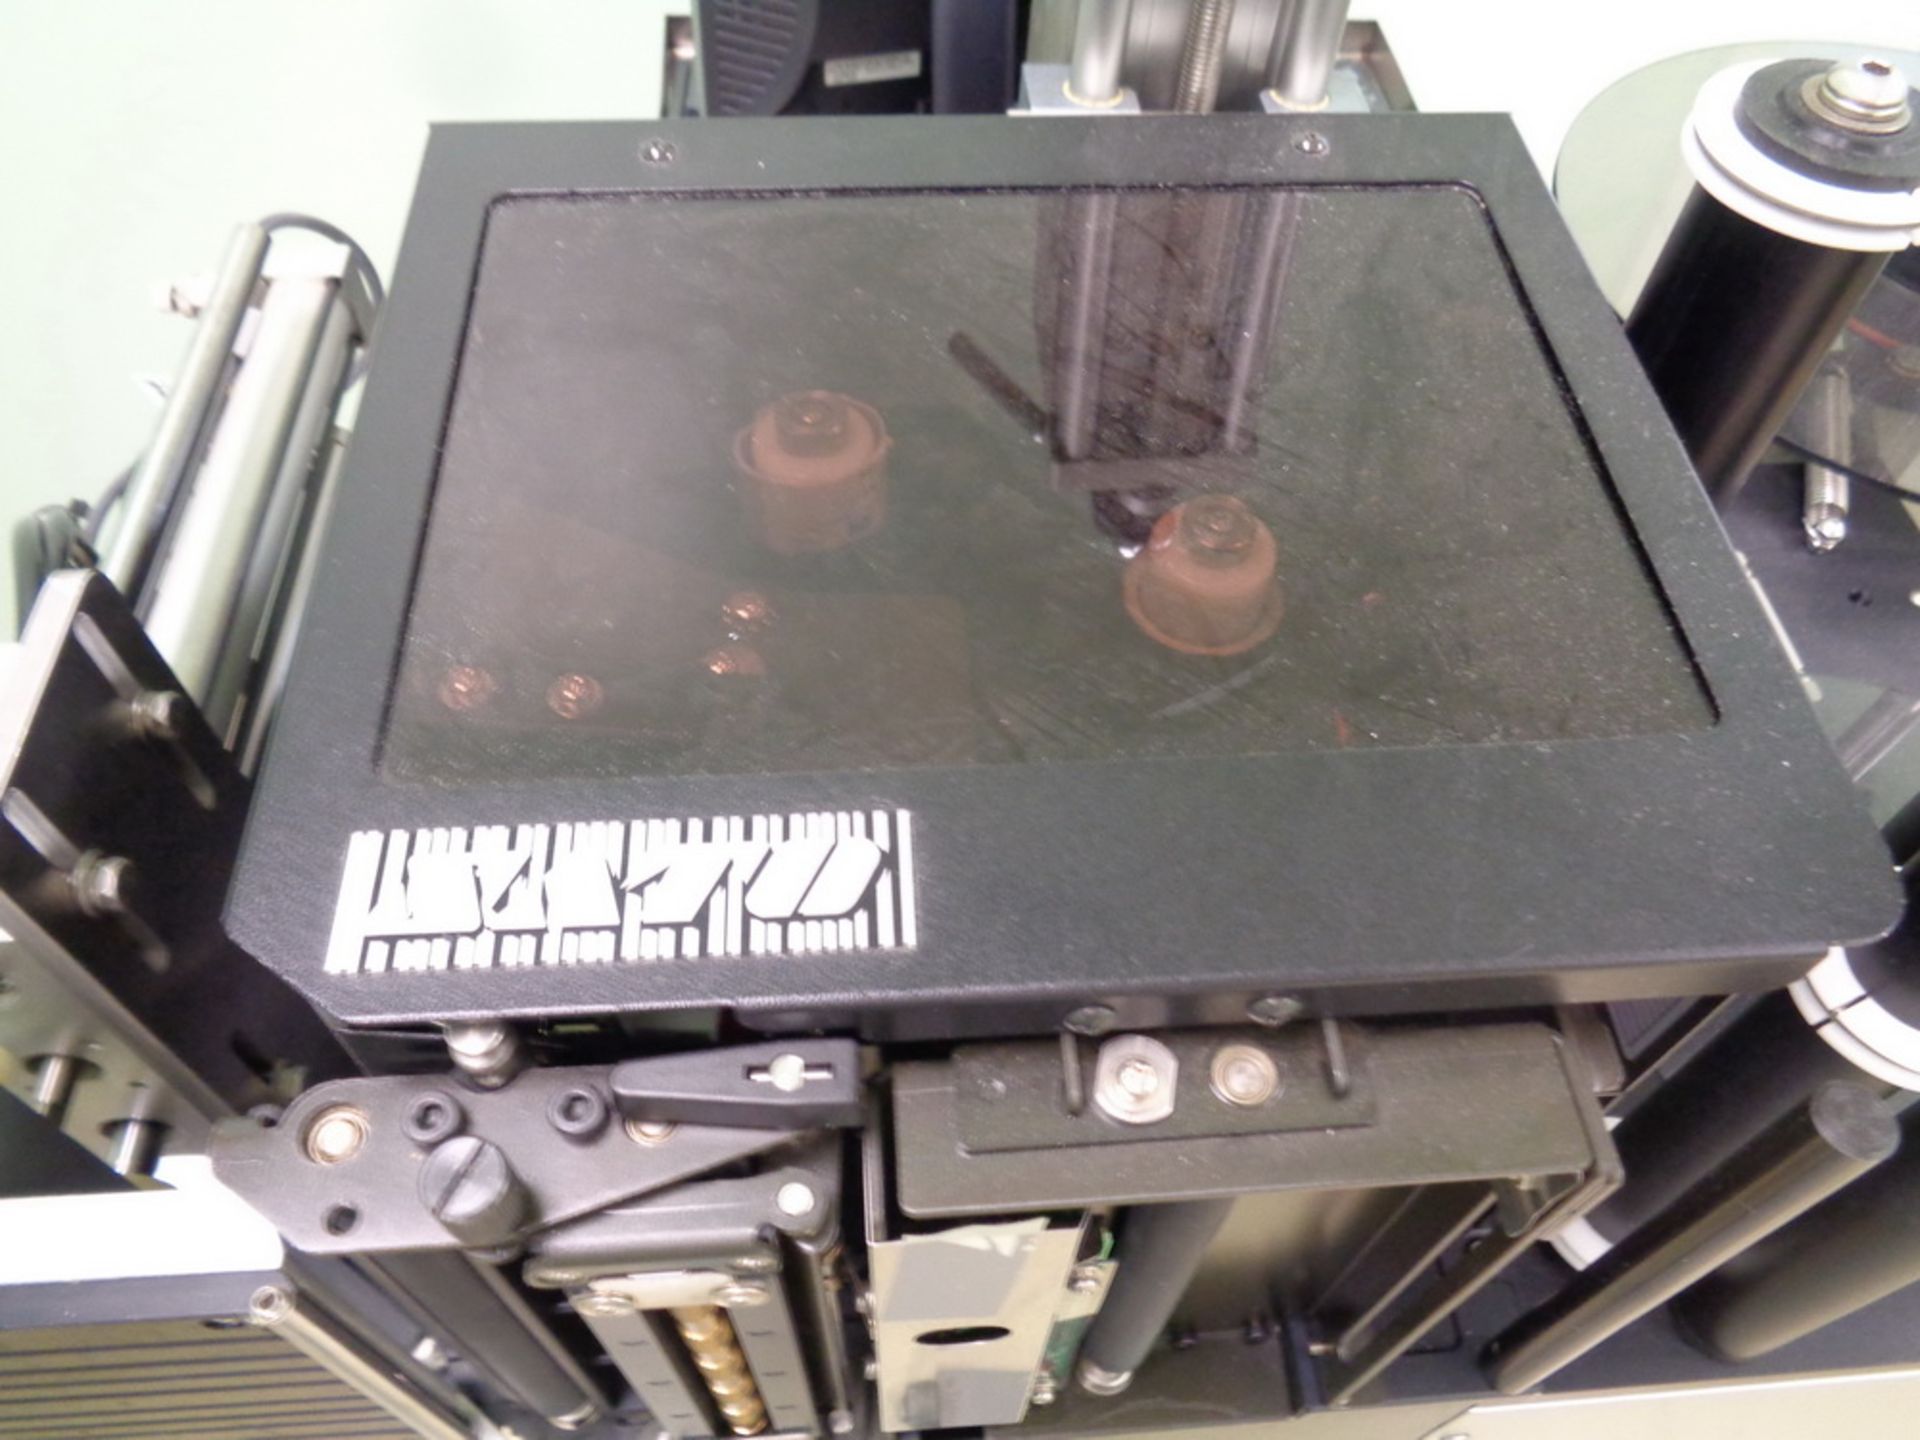 Quadrel Print and Apply Pressure Sensitive Carton Labeler, Model Q31-LS8490, S/N 57957-01 - Image 6 of 11